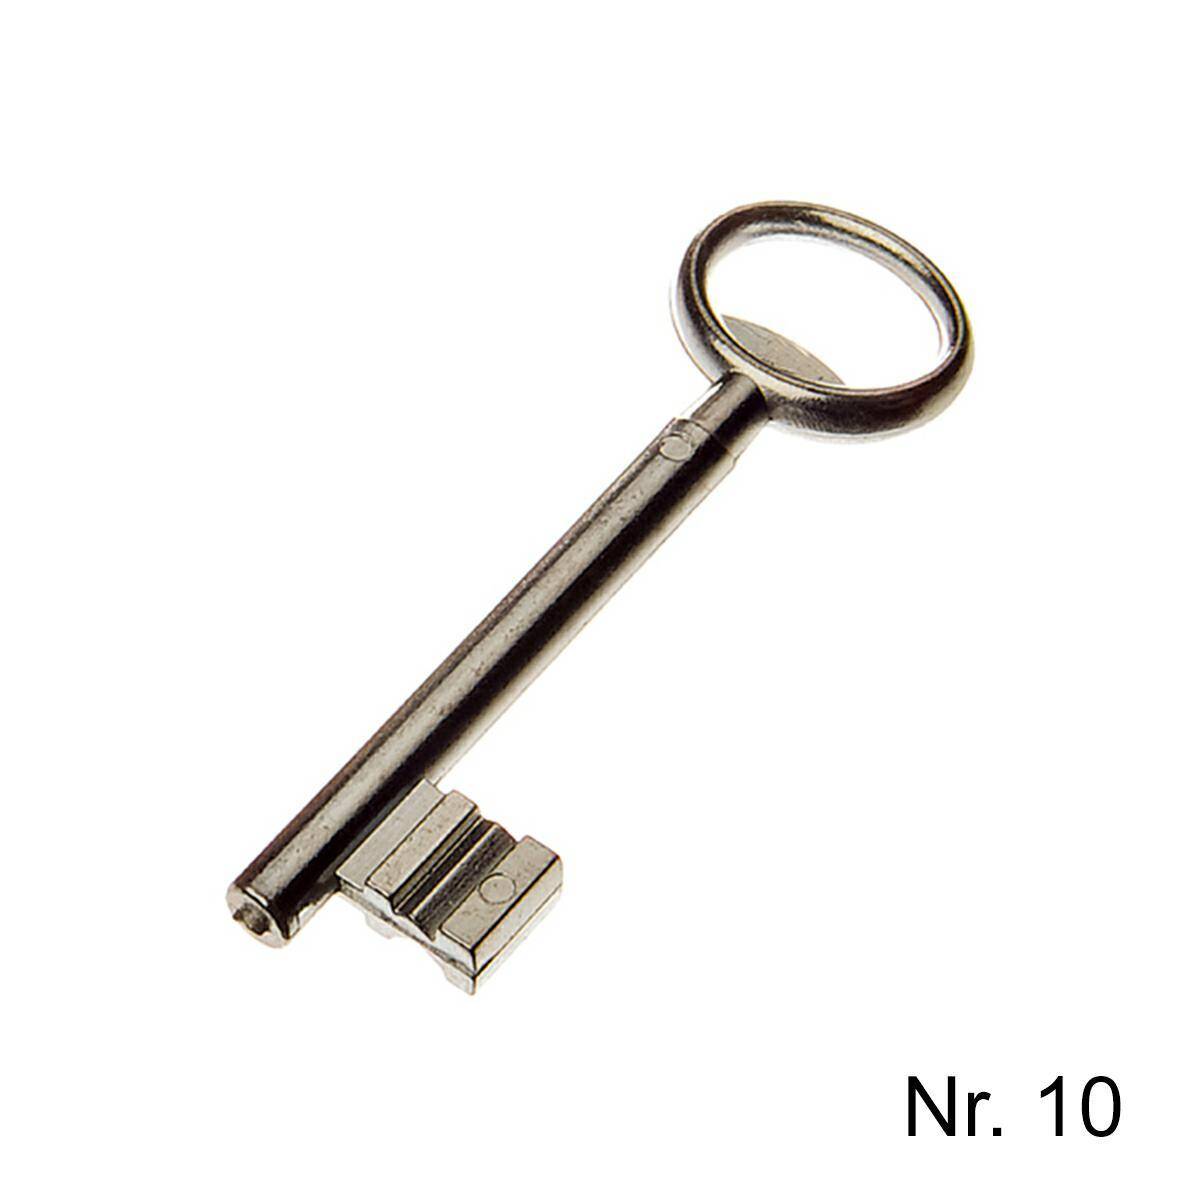 Cast key Jania for the lock - No. 10